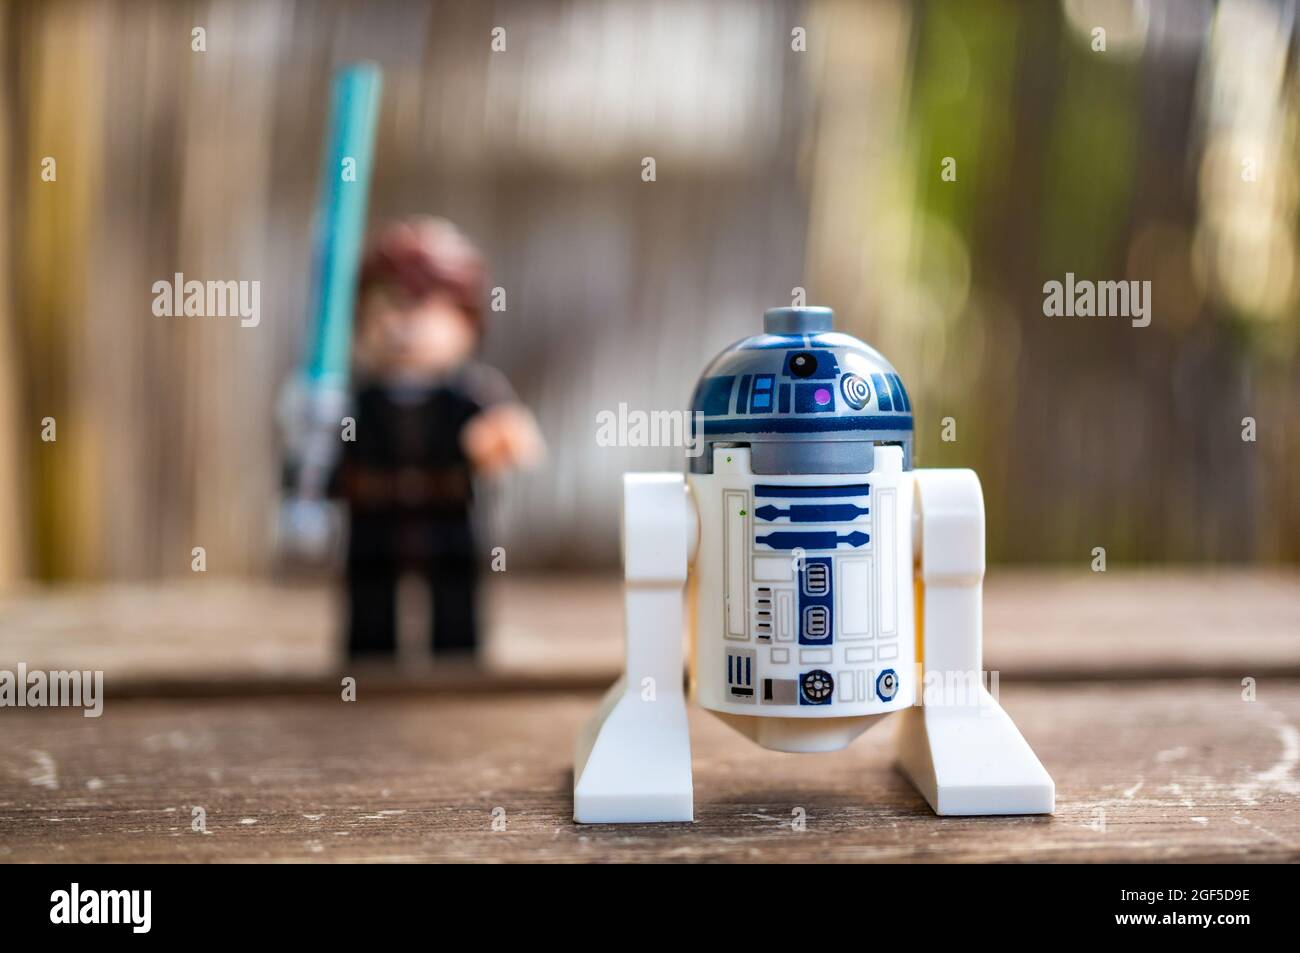 POZNAN, POLEN - 09. Aug 2021: Ein Lego Star Wars R2 D2